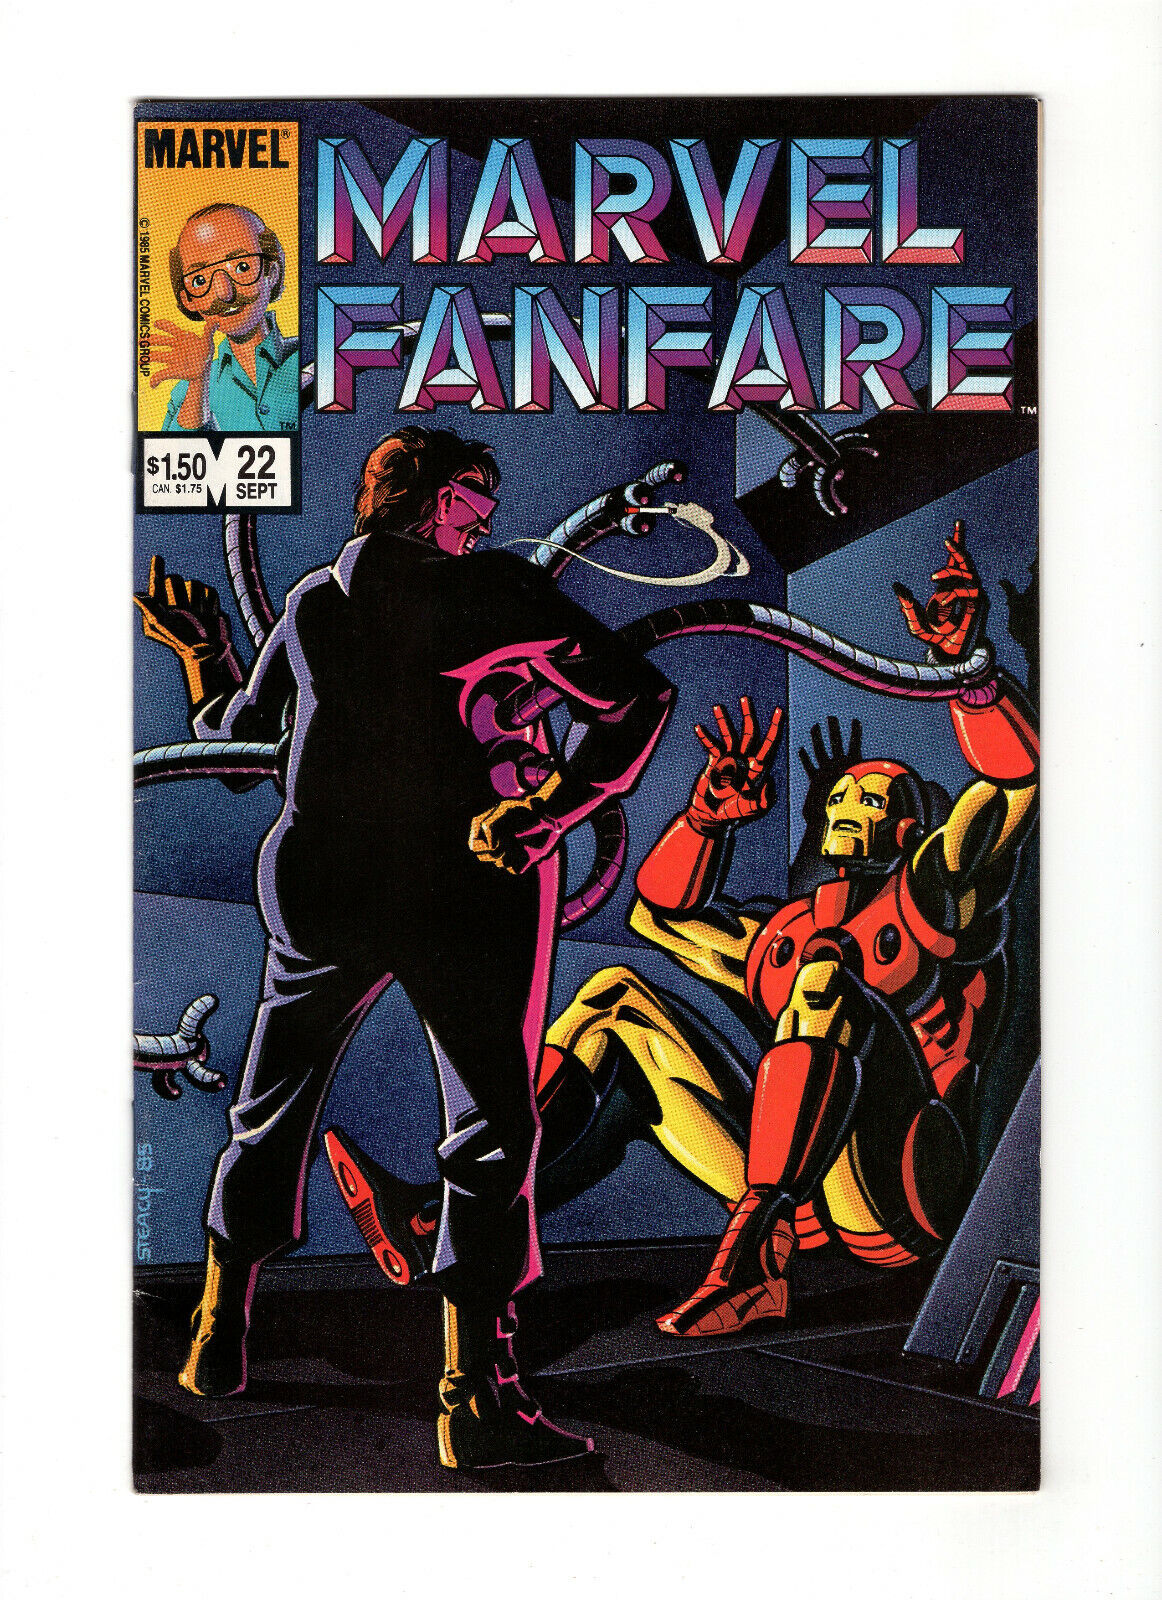 Marvel Fanfare #22 (Marvel Comics, 1985)